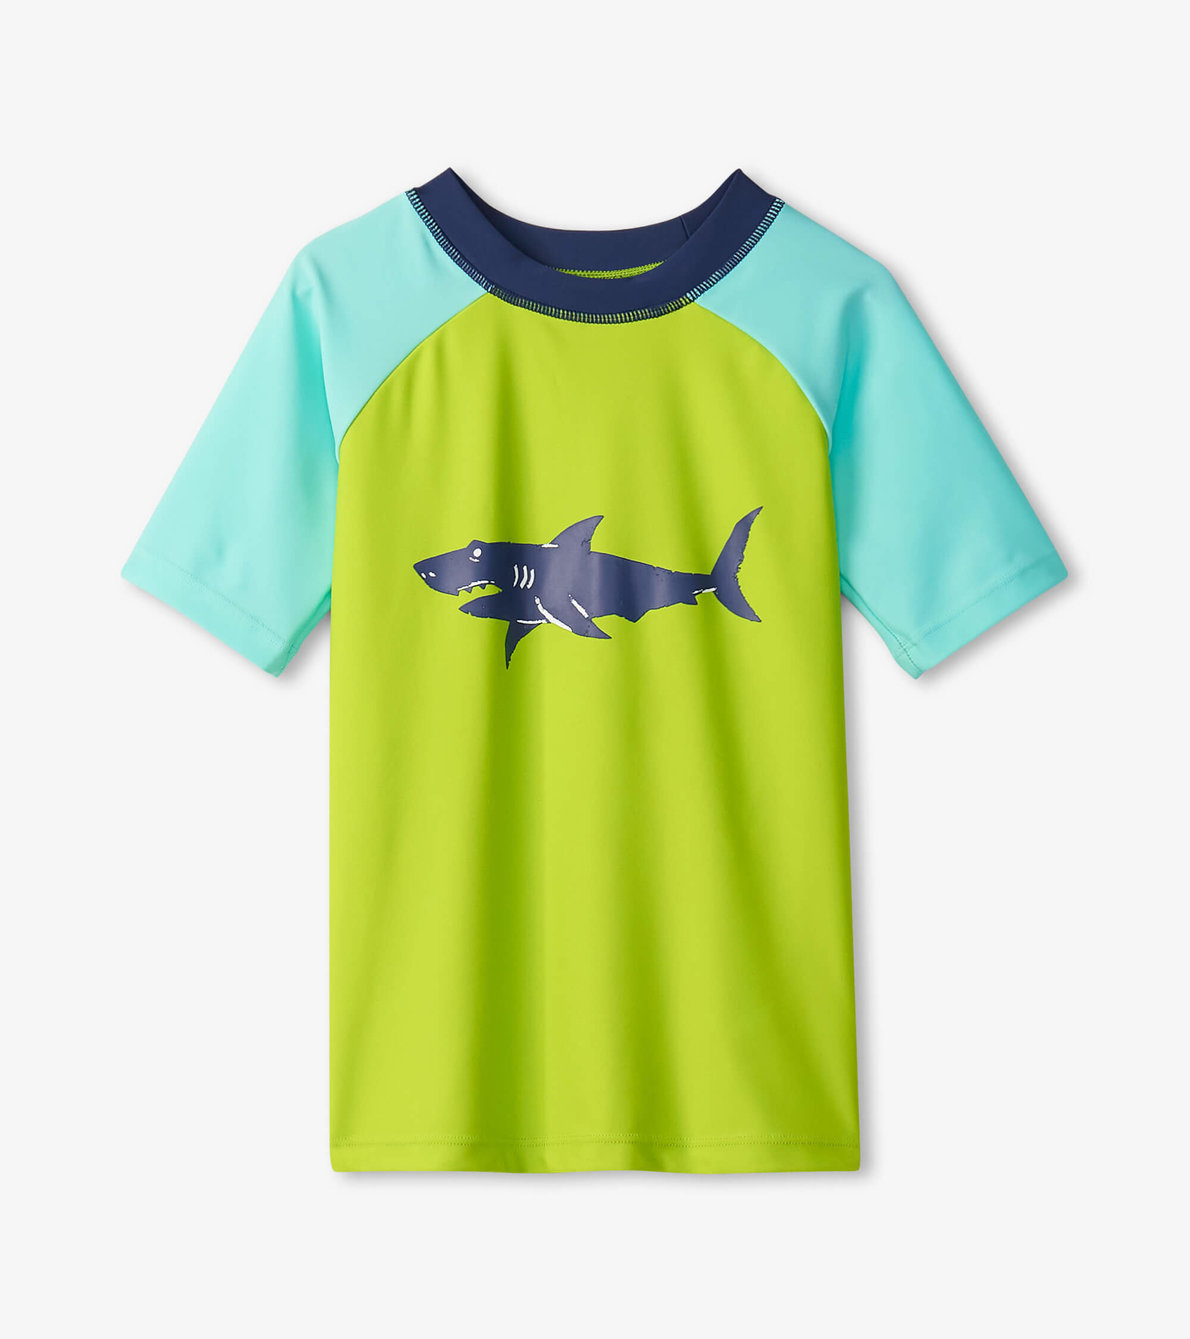 View larger image of Boys Lime Green Shark Short Sleeve Rashguard